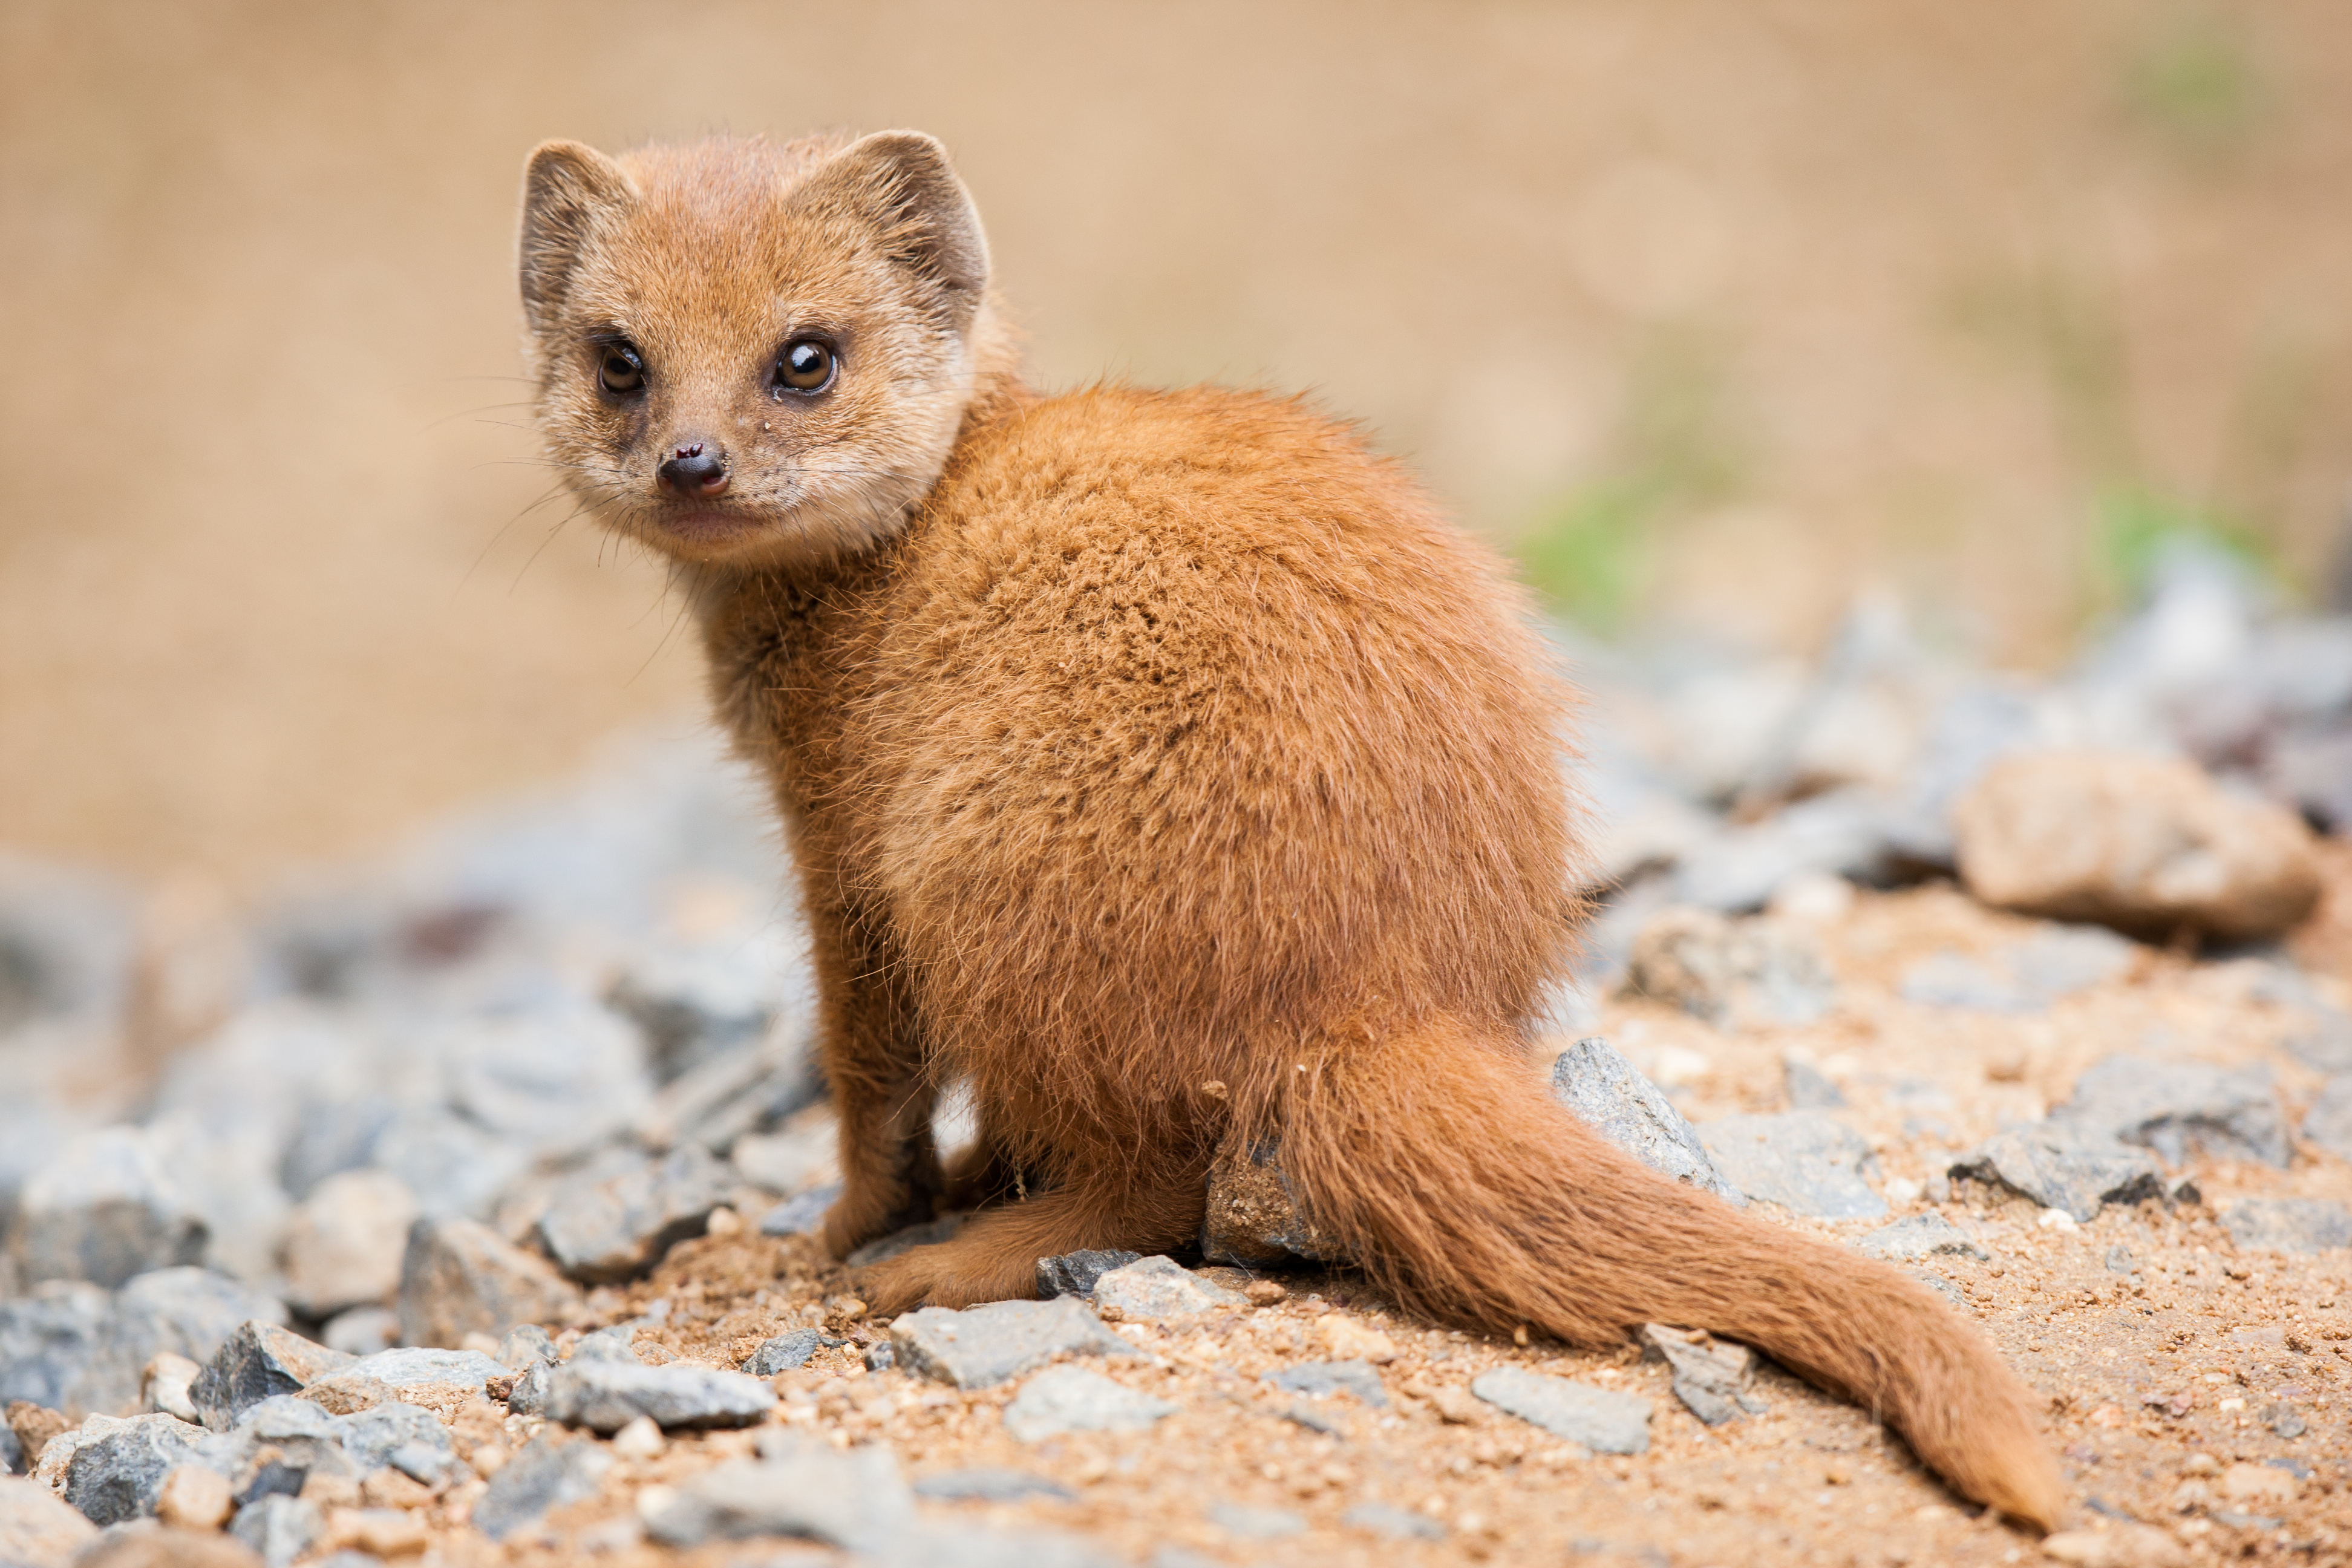 500+ Free Mongoose & Meerkat Images - Pixabay